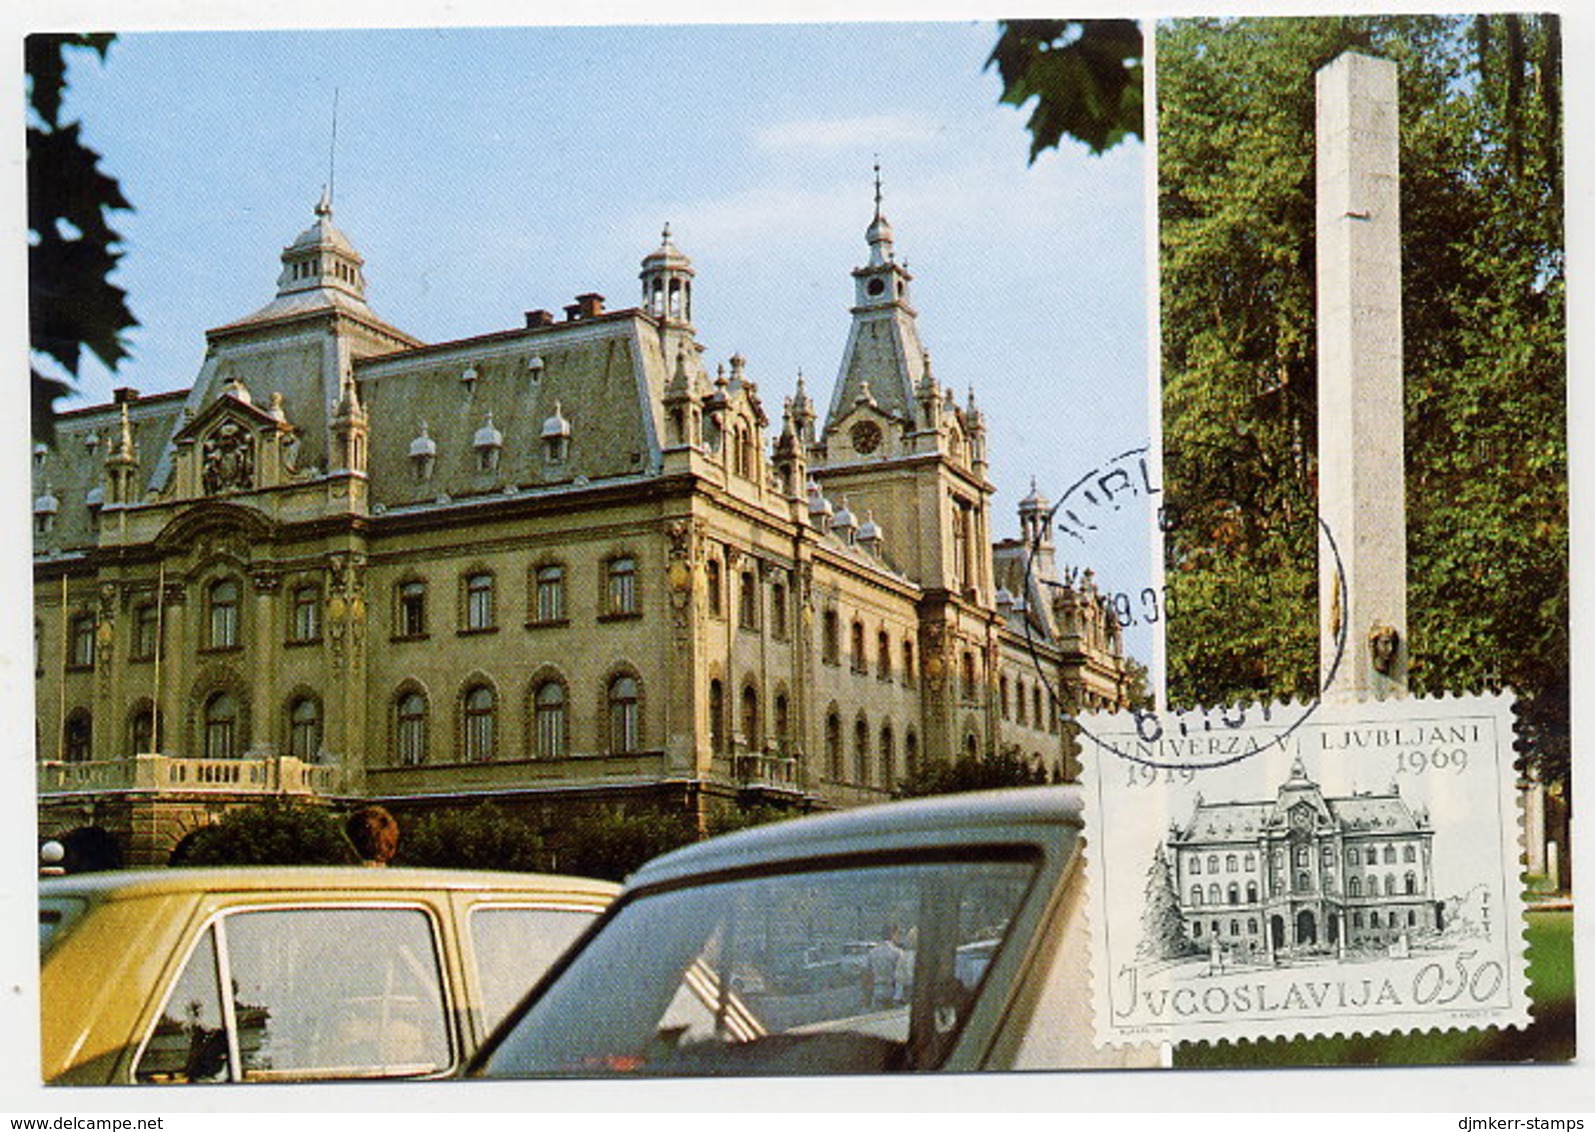 YUGOSLAVIA 1969 Ljubljana University On Maximum Card. Michel 1358 - Cartoline Maximum